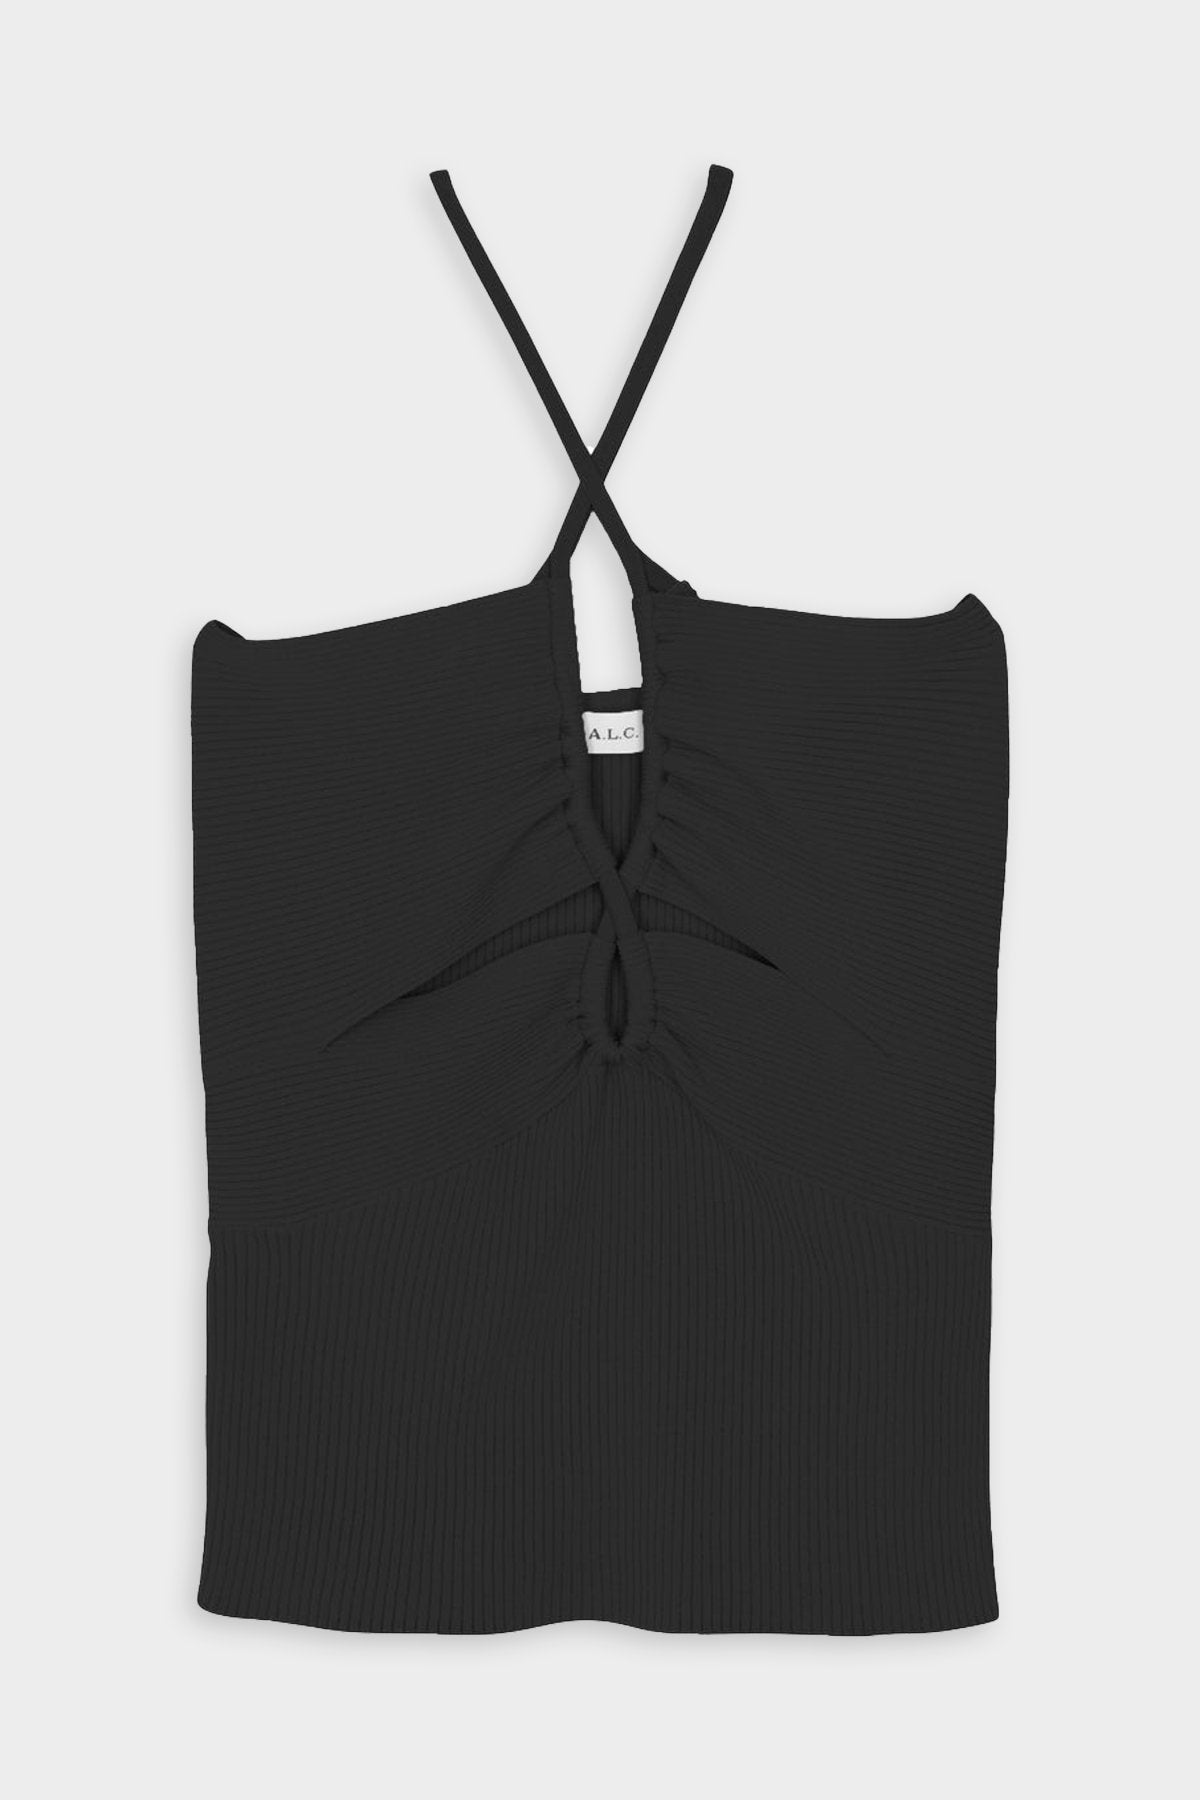 Ana Rib Knit Top in Black - shop-olivia.com